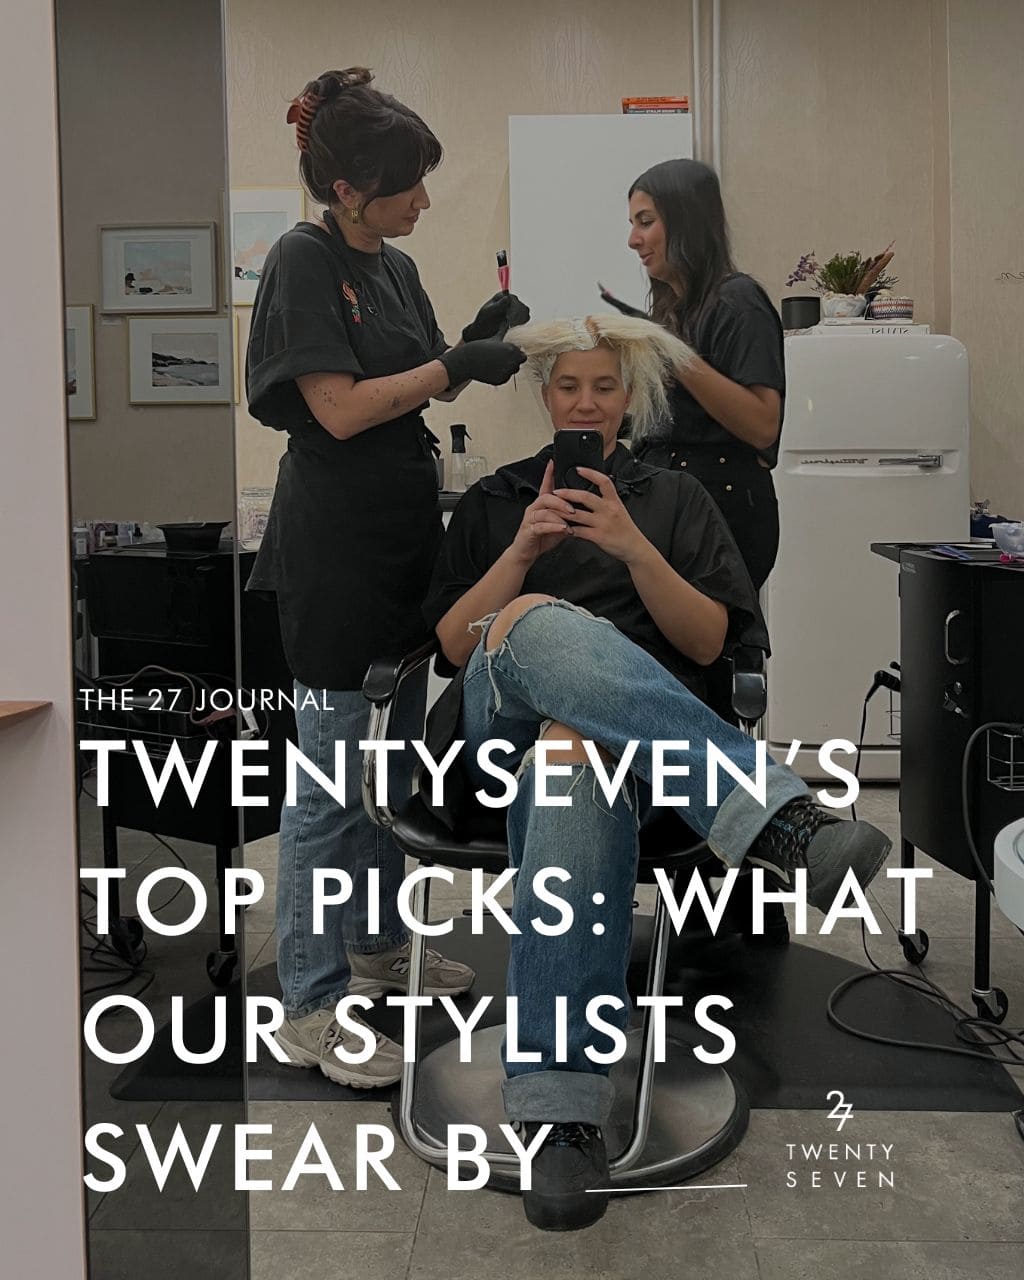 Twentyseven Toronto The 27 Journal | Twentyseven's Top Picks: What Our Stylists Swear By